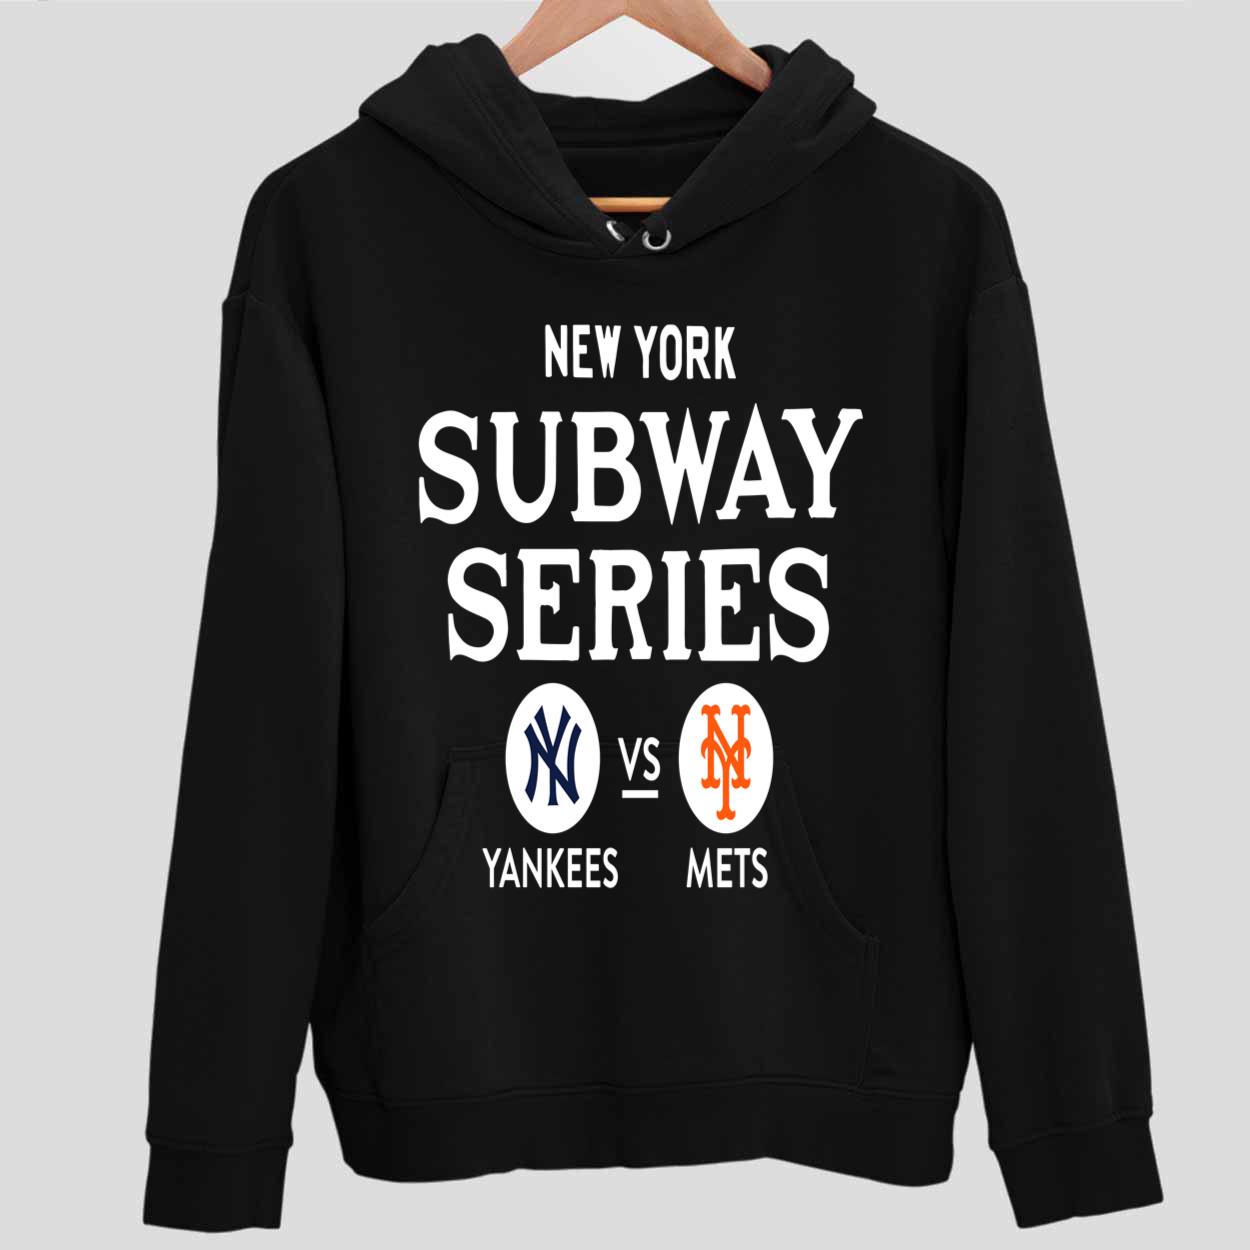 Endastore New York Subway Series Yankees Vs Mets Shirt